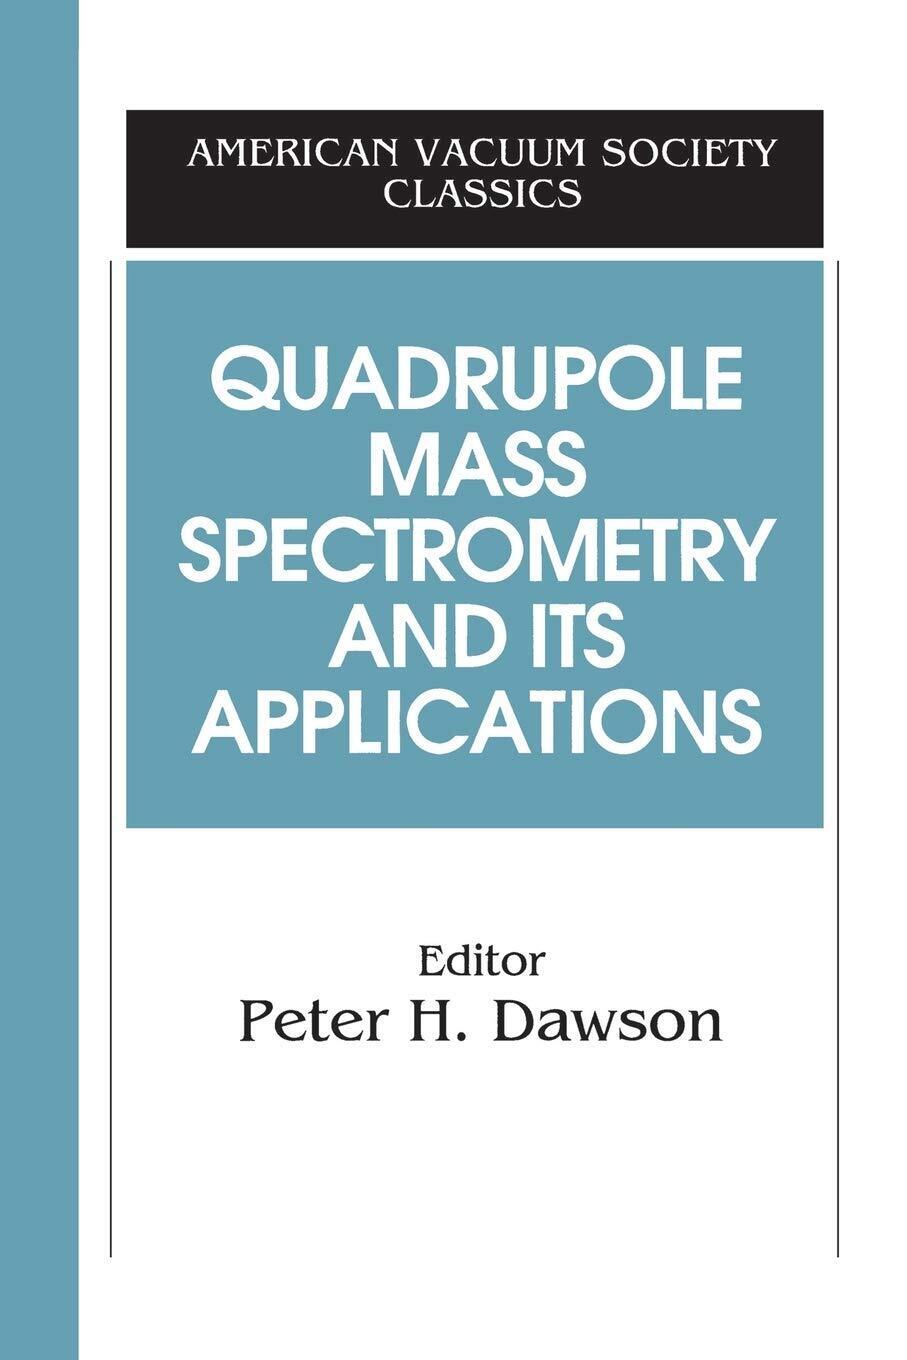 Quadruple Mass Spectrometry and Its Applications - Dawson - 1997 libro usato